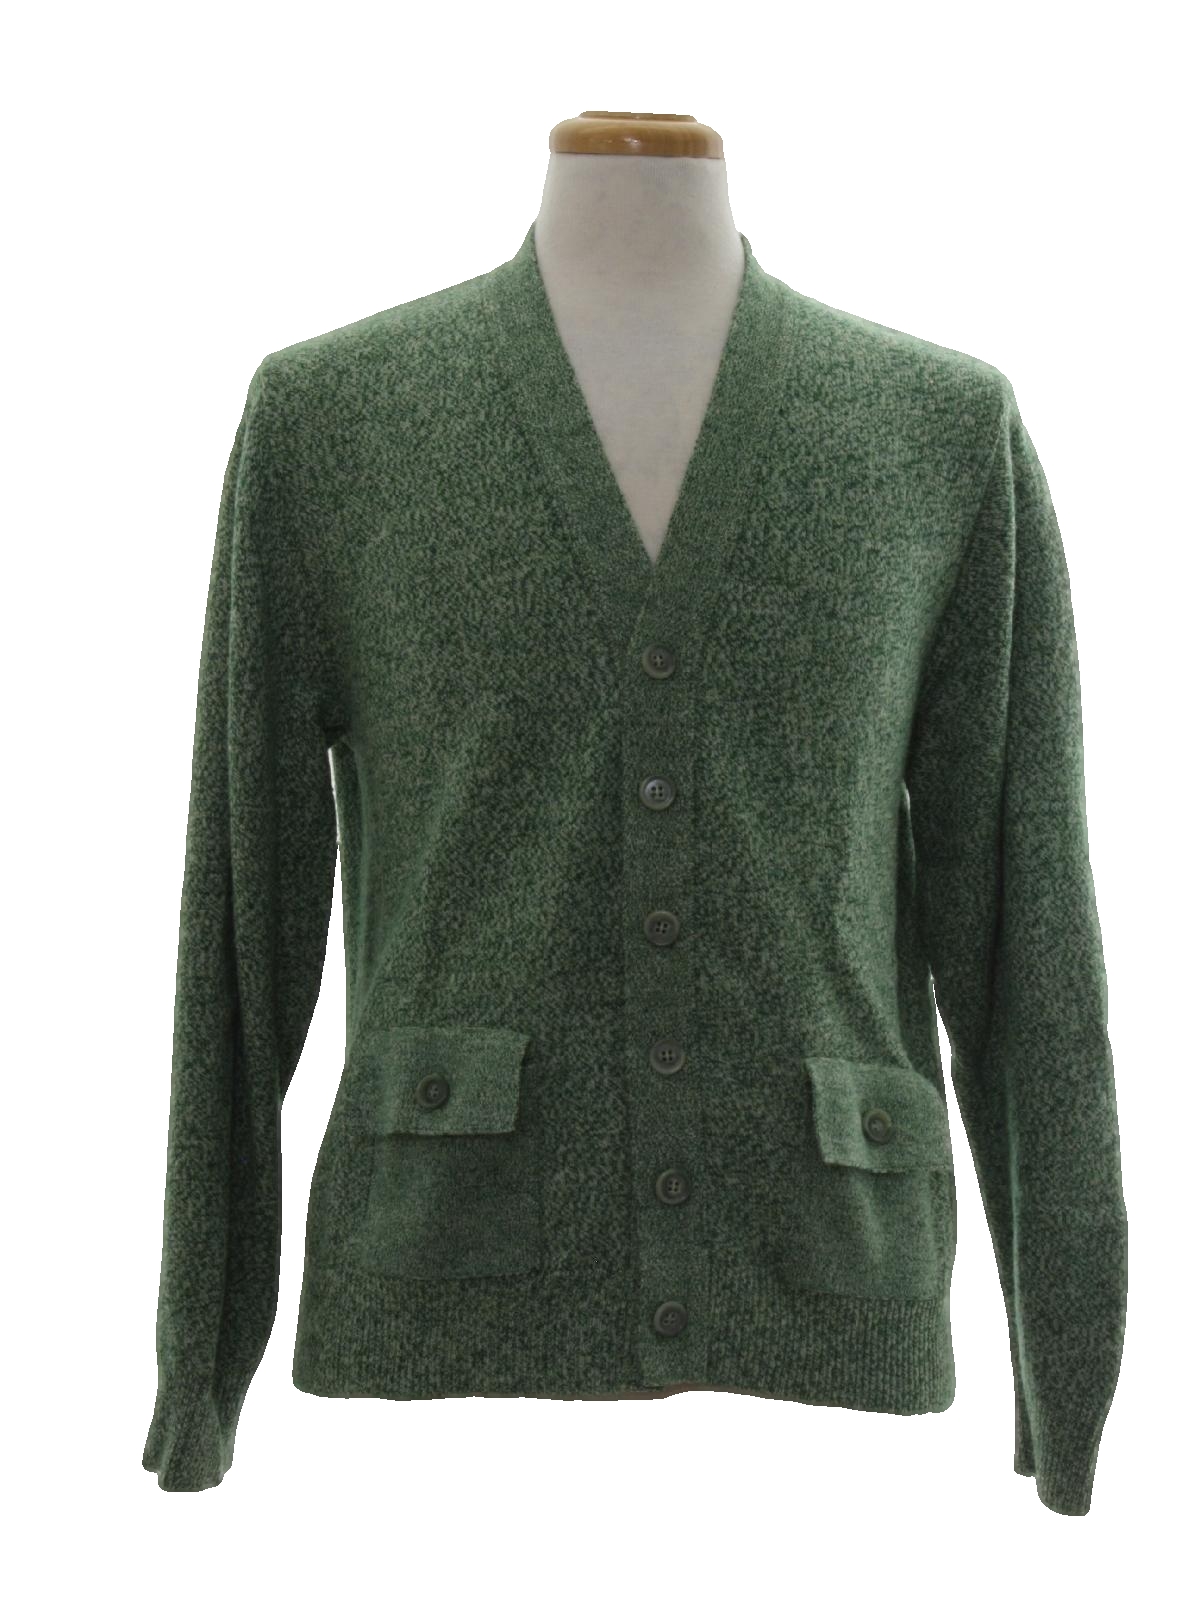 Jantzen Sixties Vintage Caridgan Sweater: 60s -Jantzen- Mens dark green ...